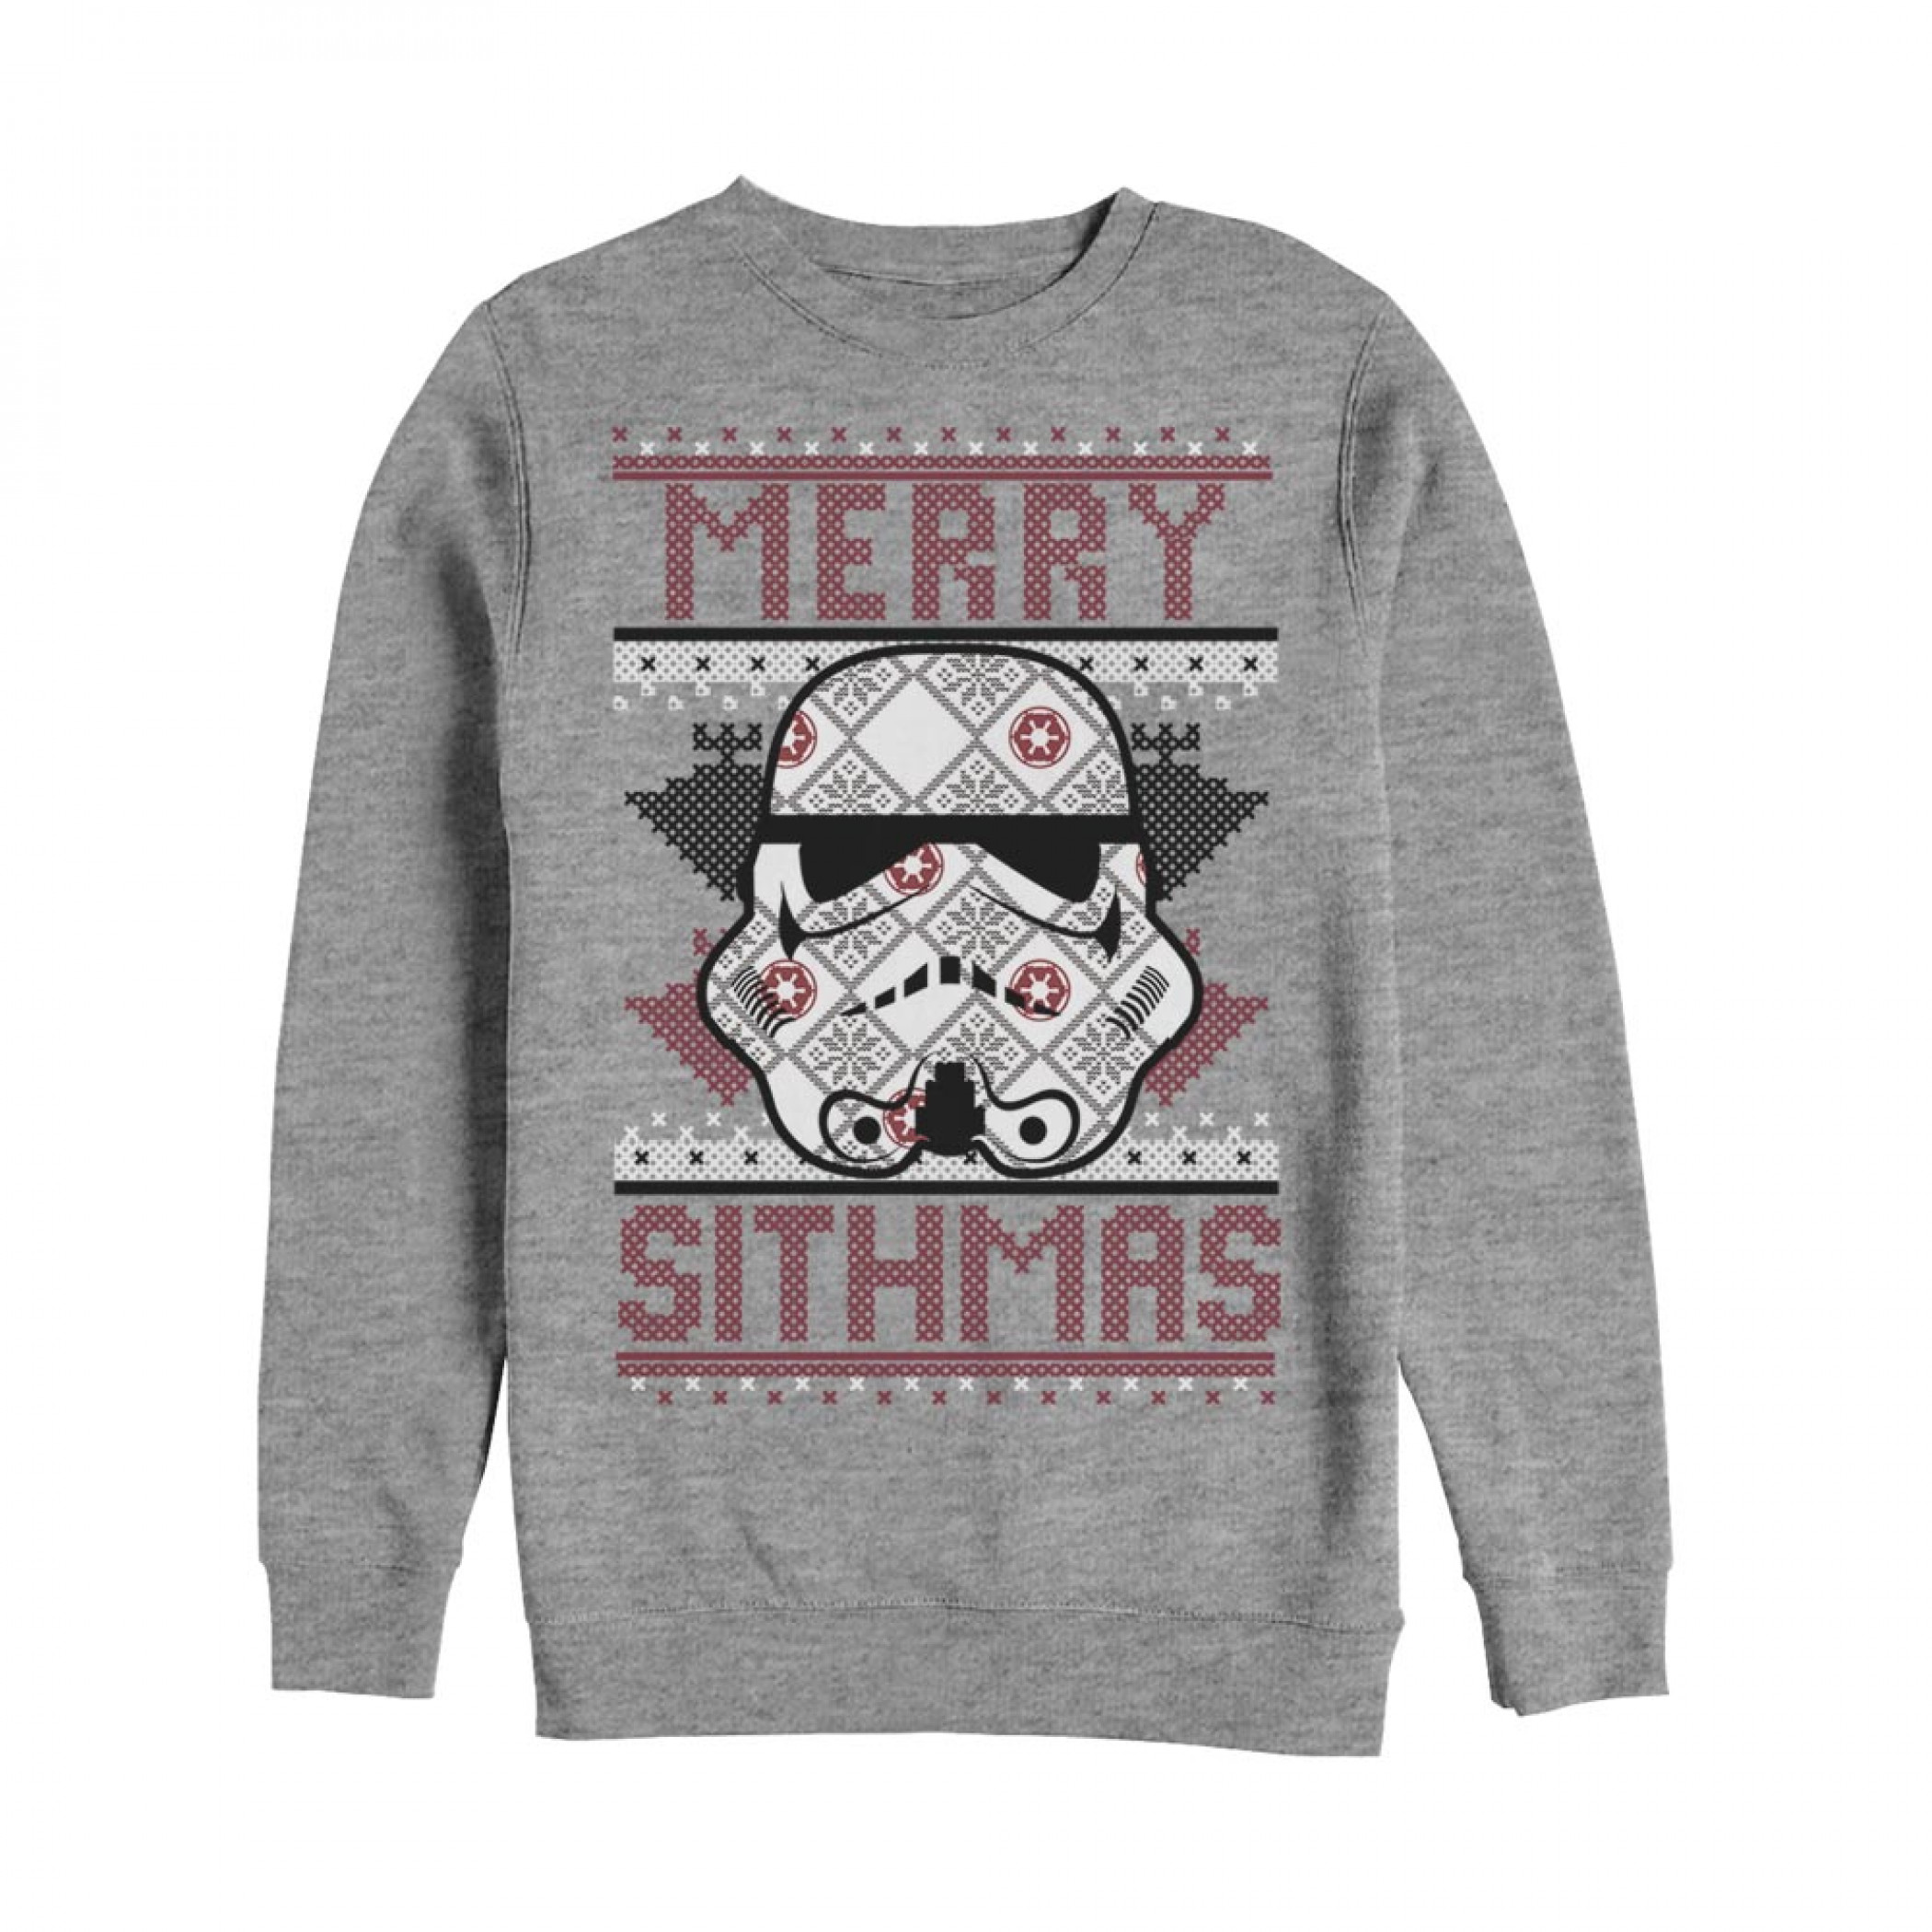 Star Wars Merry Sithmas Ugly Christmas Sweatshirt